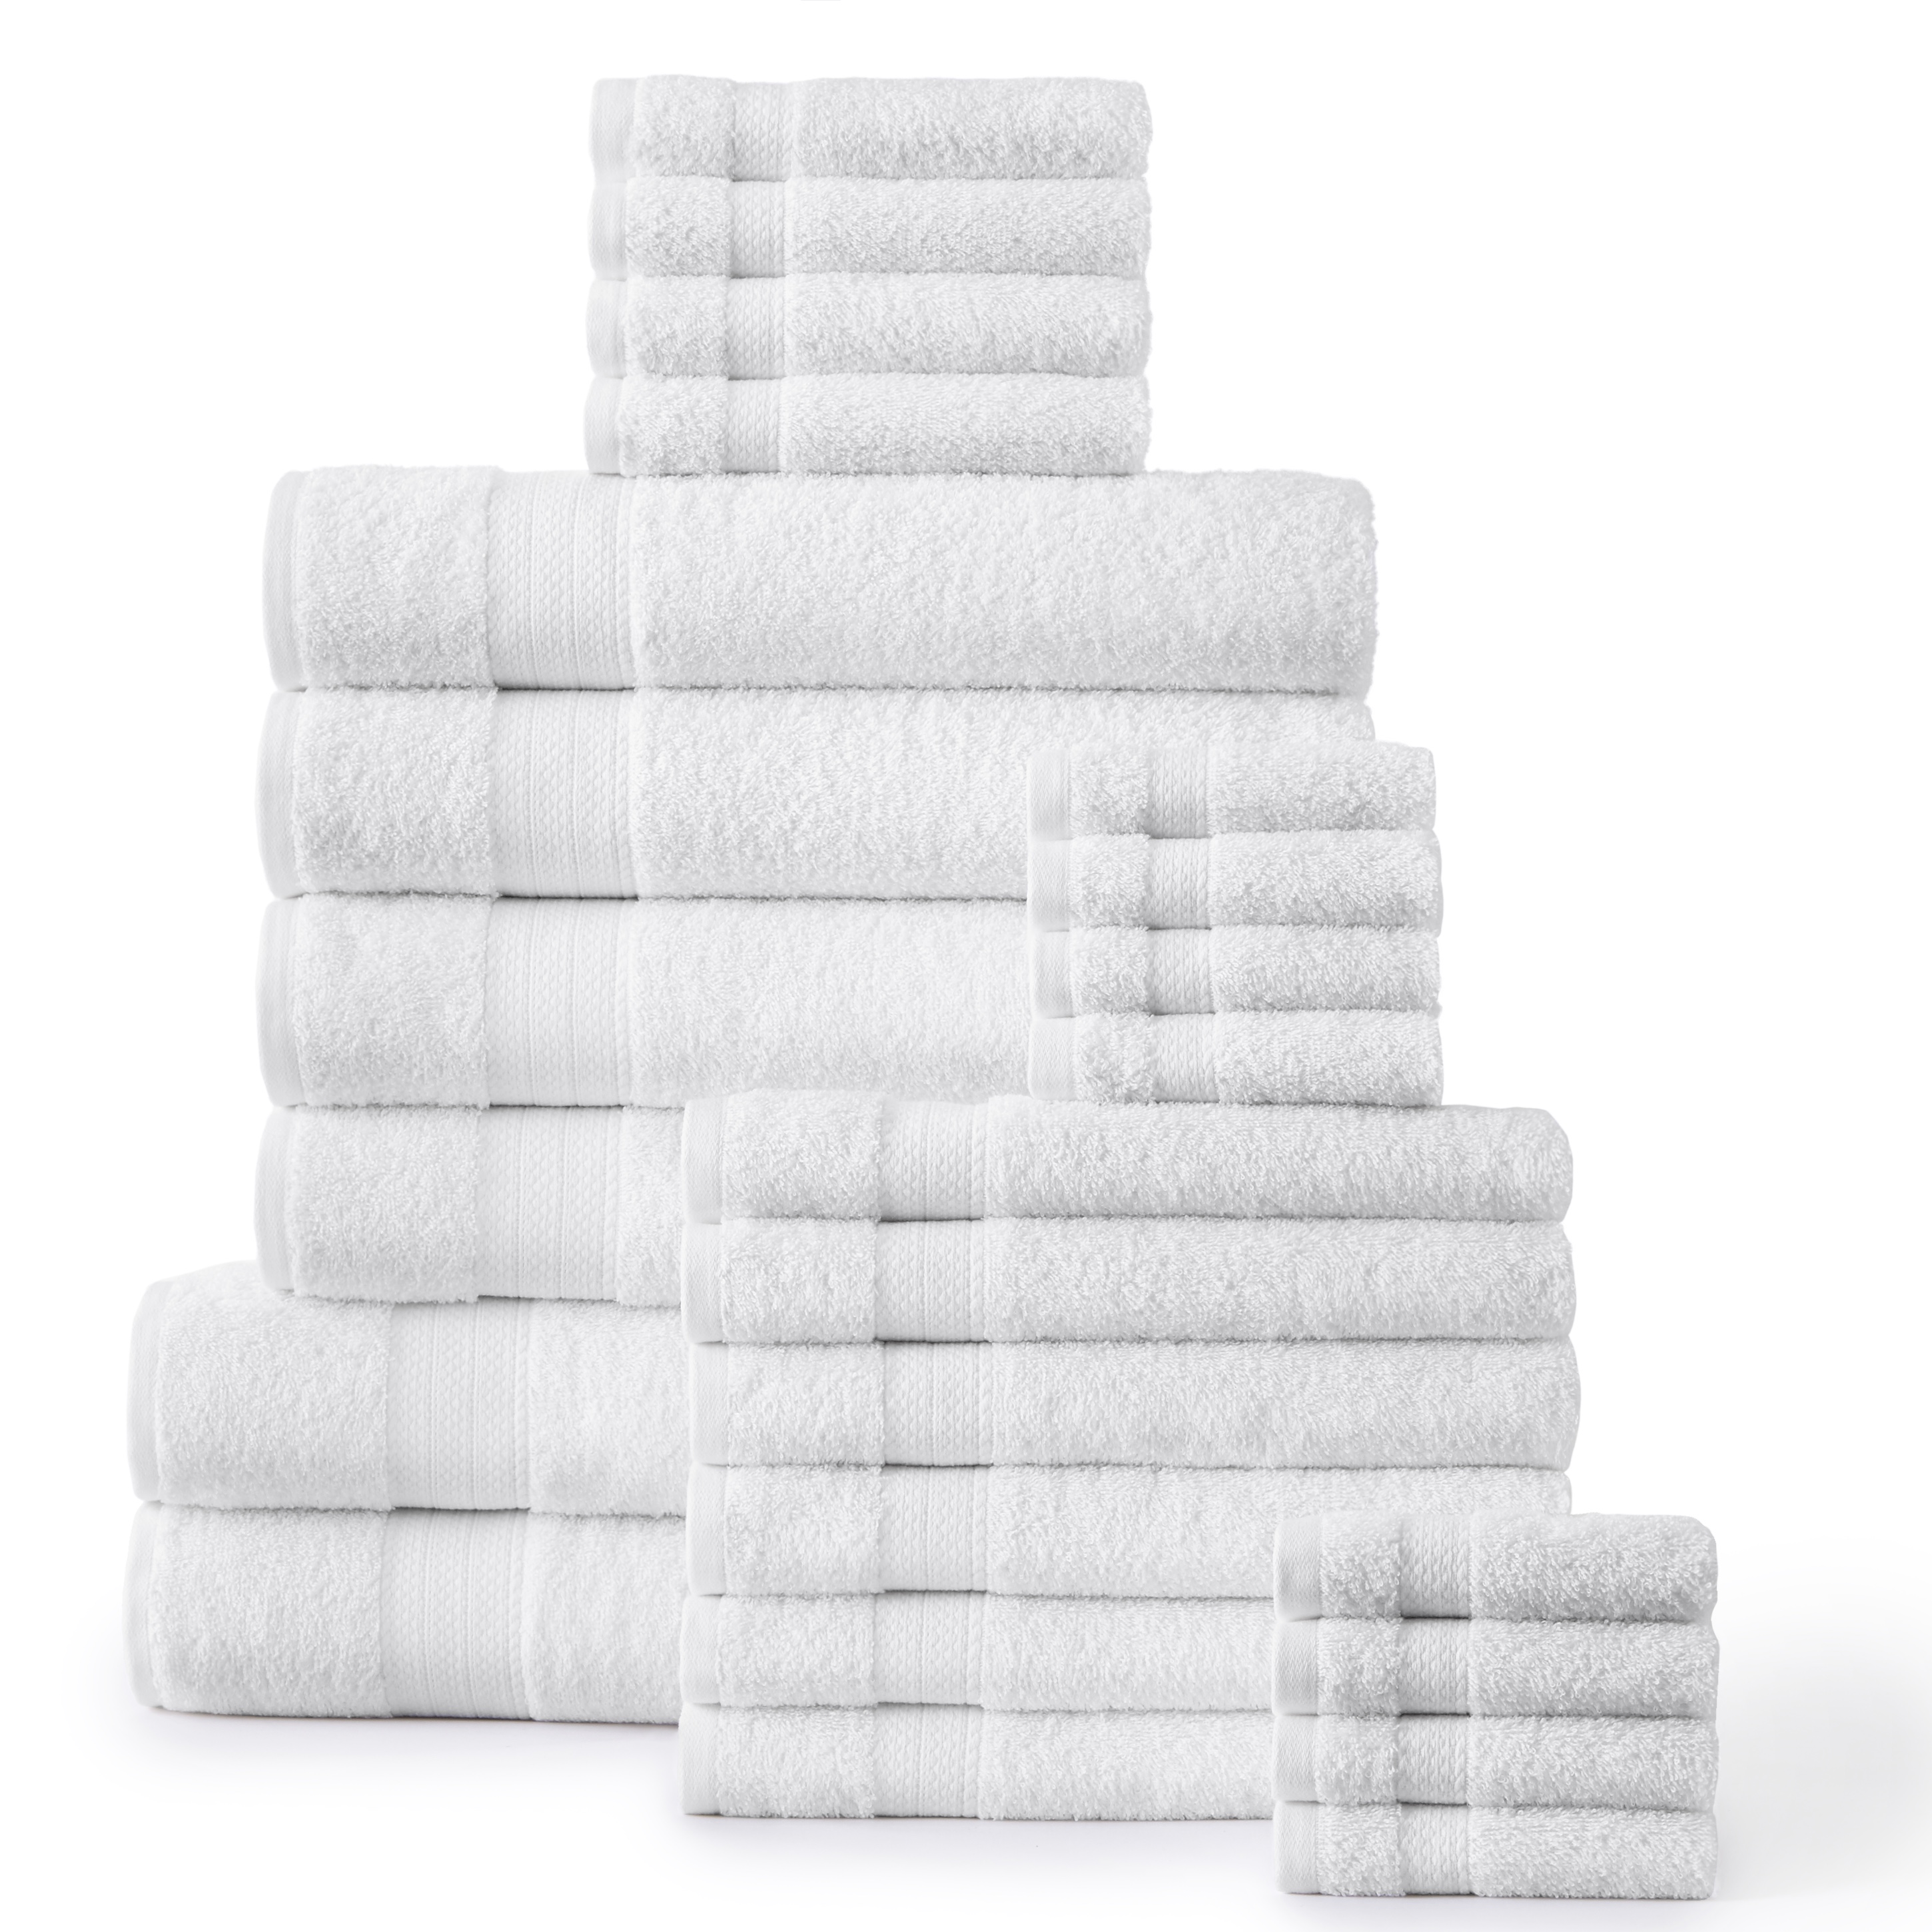 24PC Bath Towel Set (2 Sheets, 4 Bath, 6 Hand, 4 Fingertip & 8 Wash) - White, Addy Home Best Value - image 1 of 6